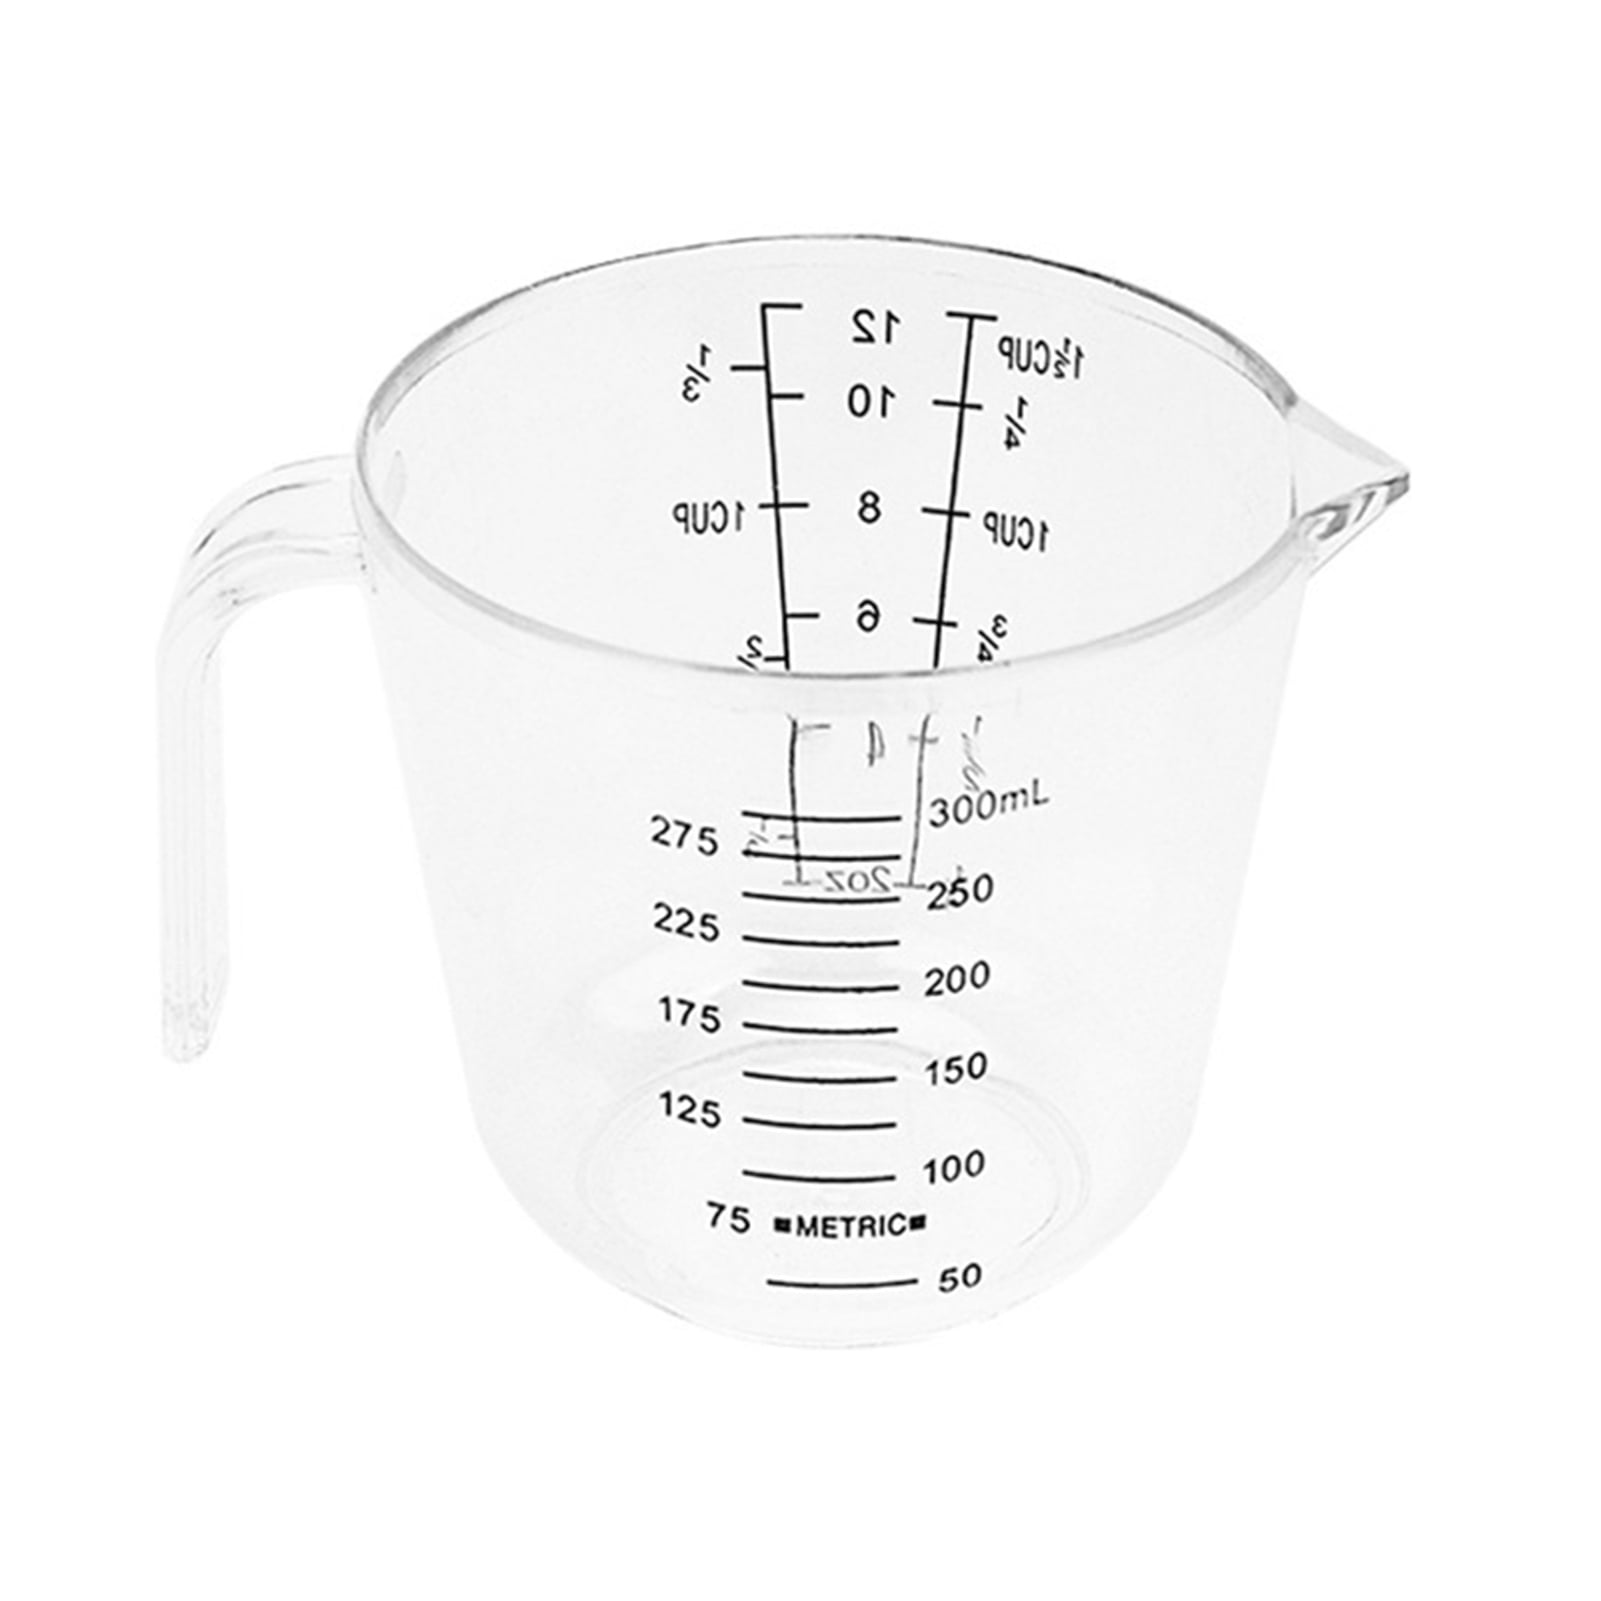 Measuring Cups, Liquid Measuring Cups in Stock - ULINE